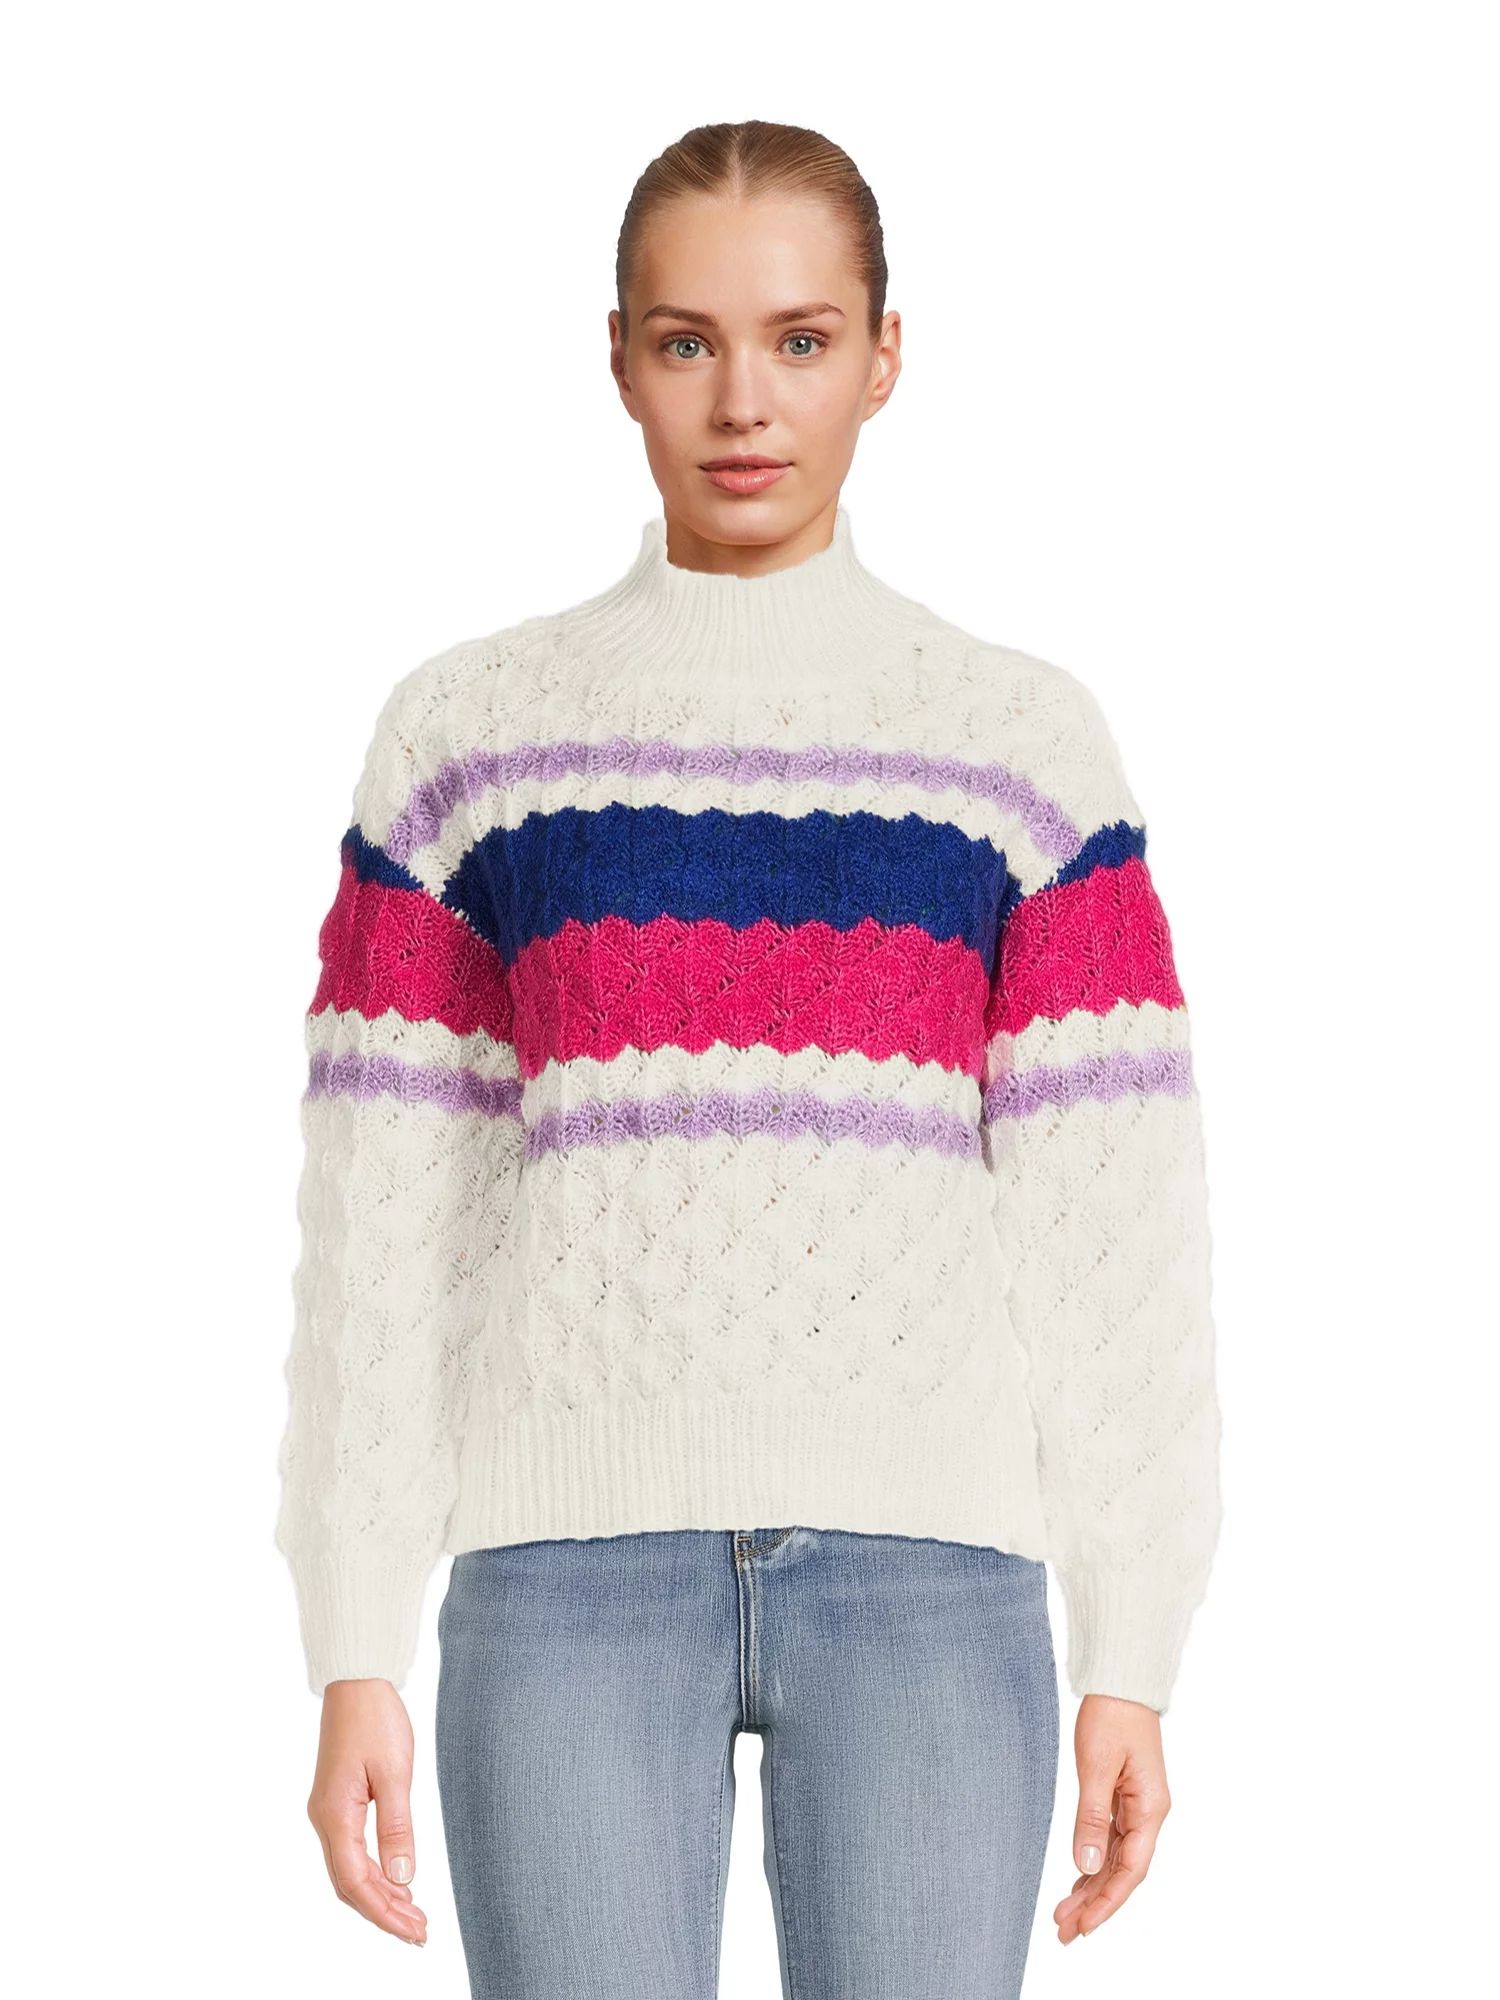 99 Jane Street Women's Mock Neck Pullover Sweater with Long Sleeves, Midweight, Sizes XS-XXXL | Walmart (US)